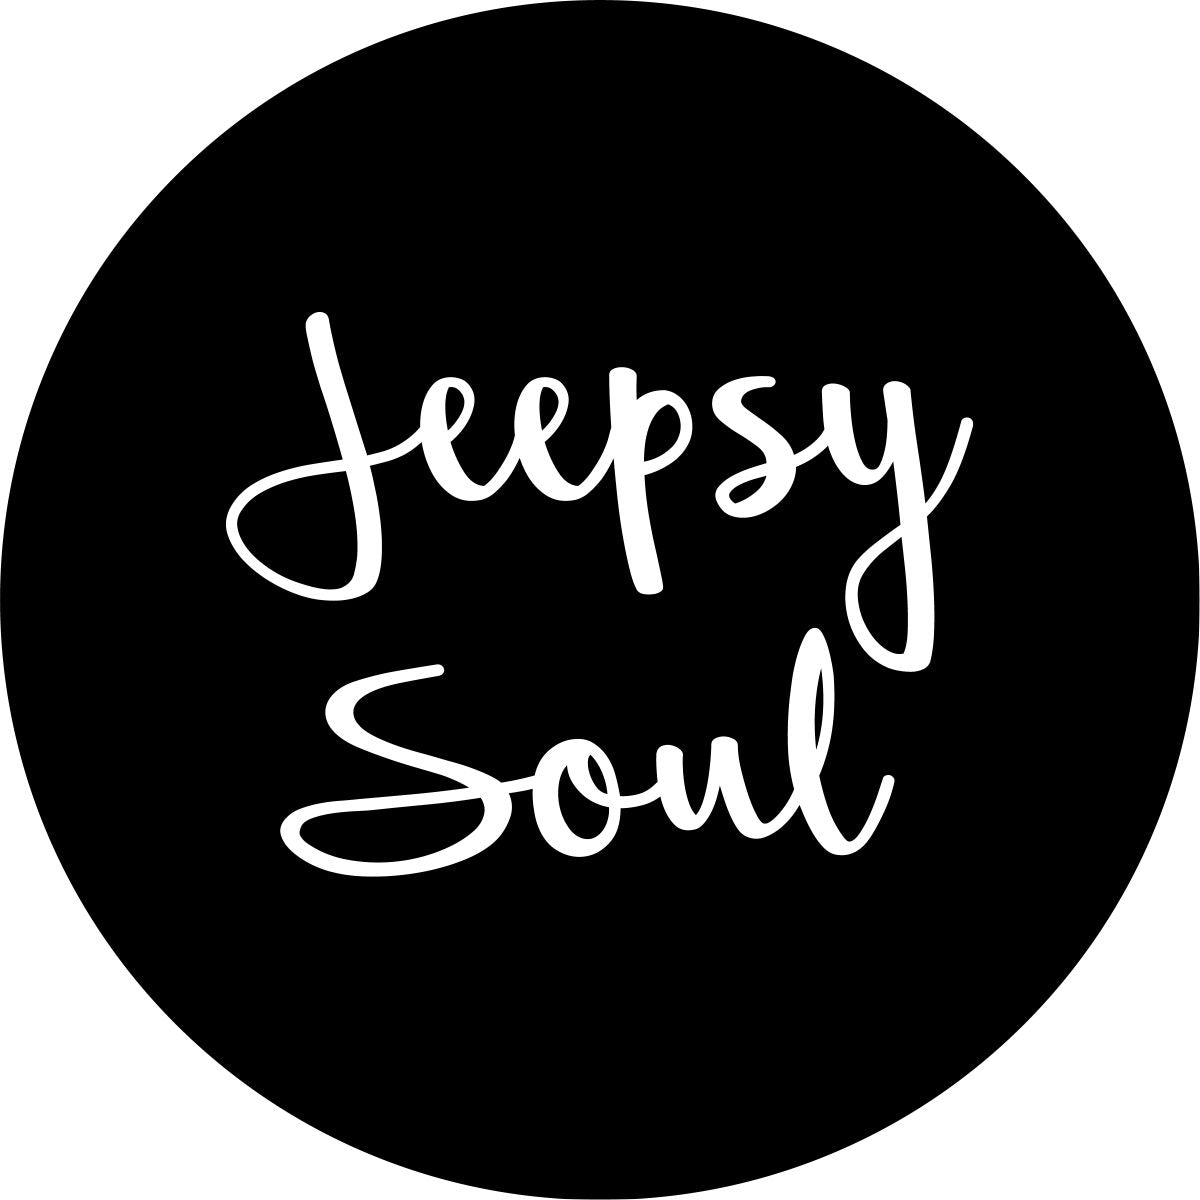 Jeepsy Soul script font written across a black spare tire cover for Jeep